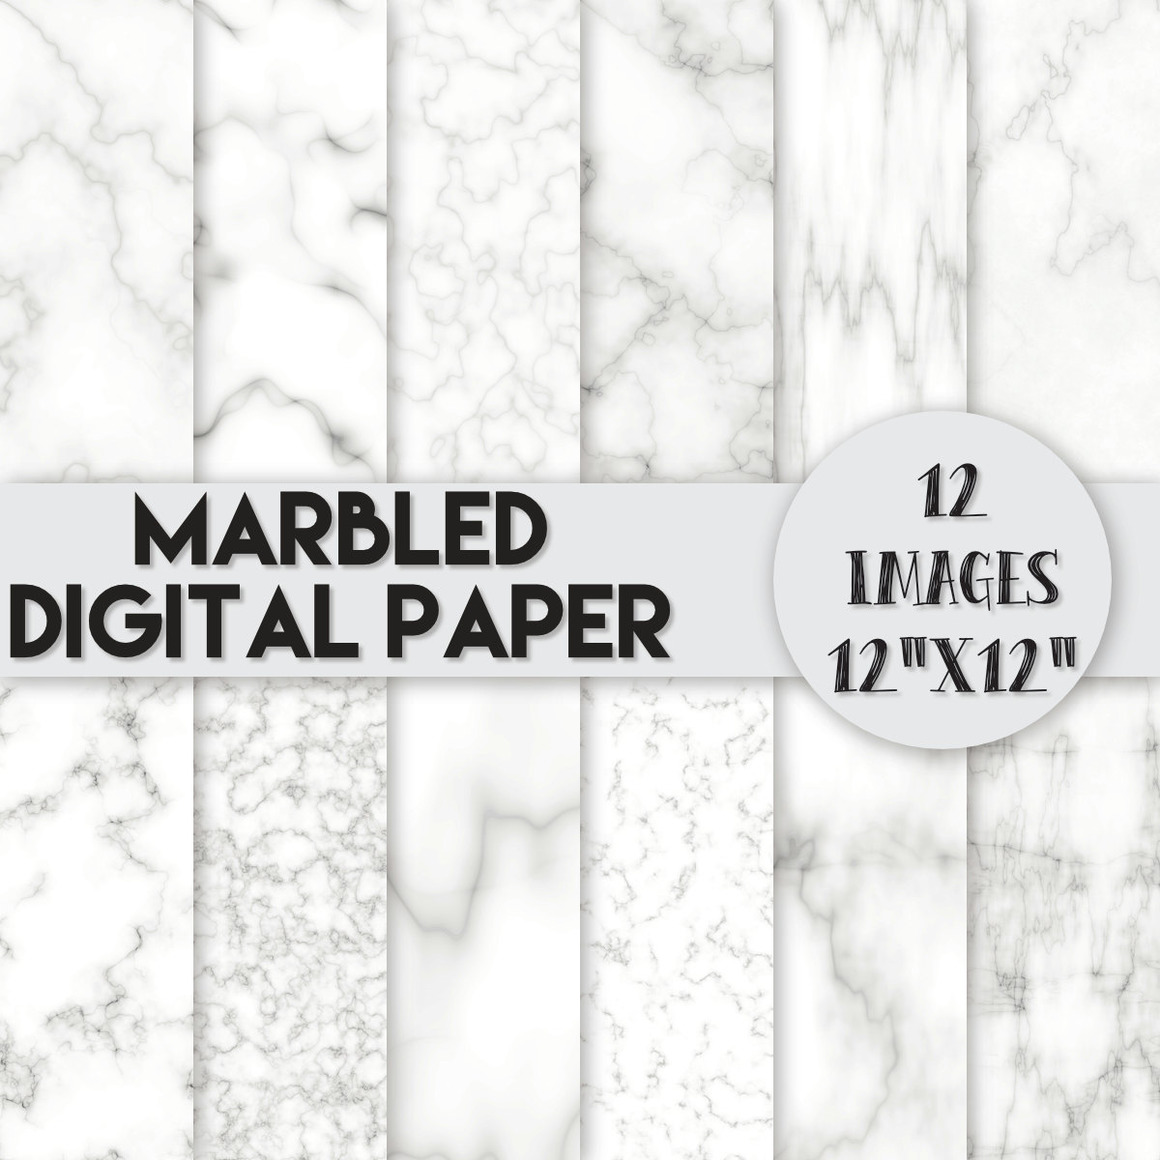 Marbled digital paper